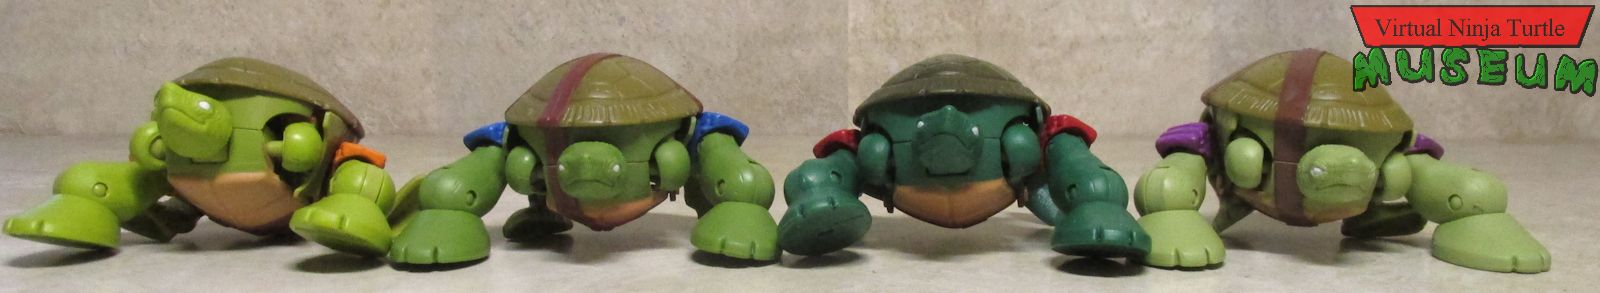 Pet Turtle forms